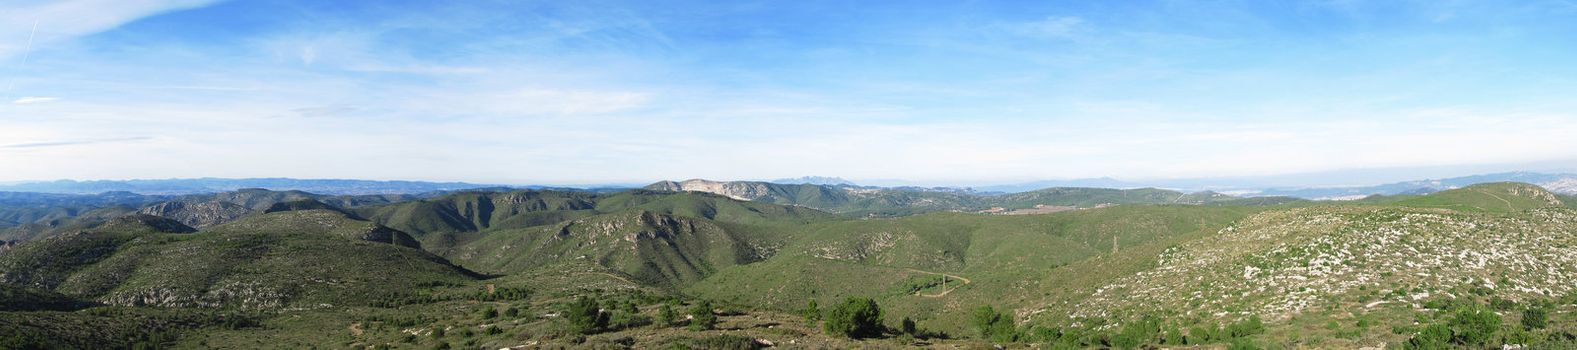 Panorama view towards Montserrat mountain from Garraf Natural Park, Catalonia, Spain 